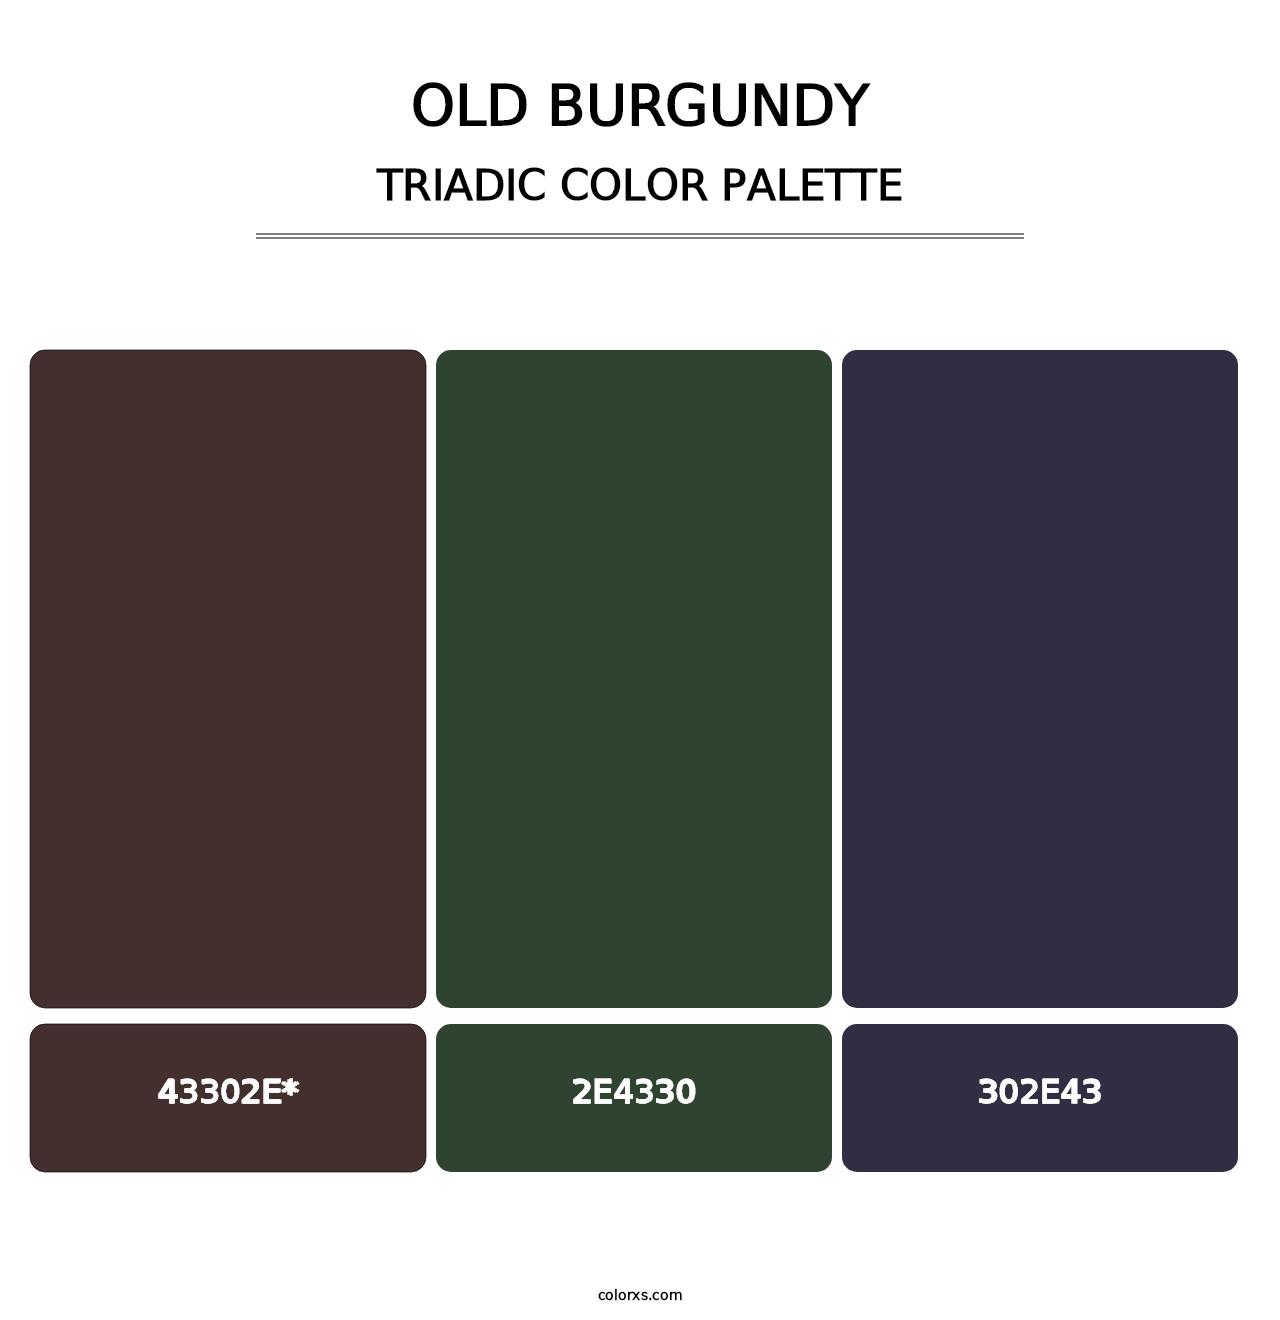 Old Burgundy - Triadic Color Palette